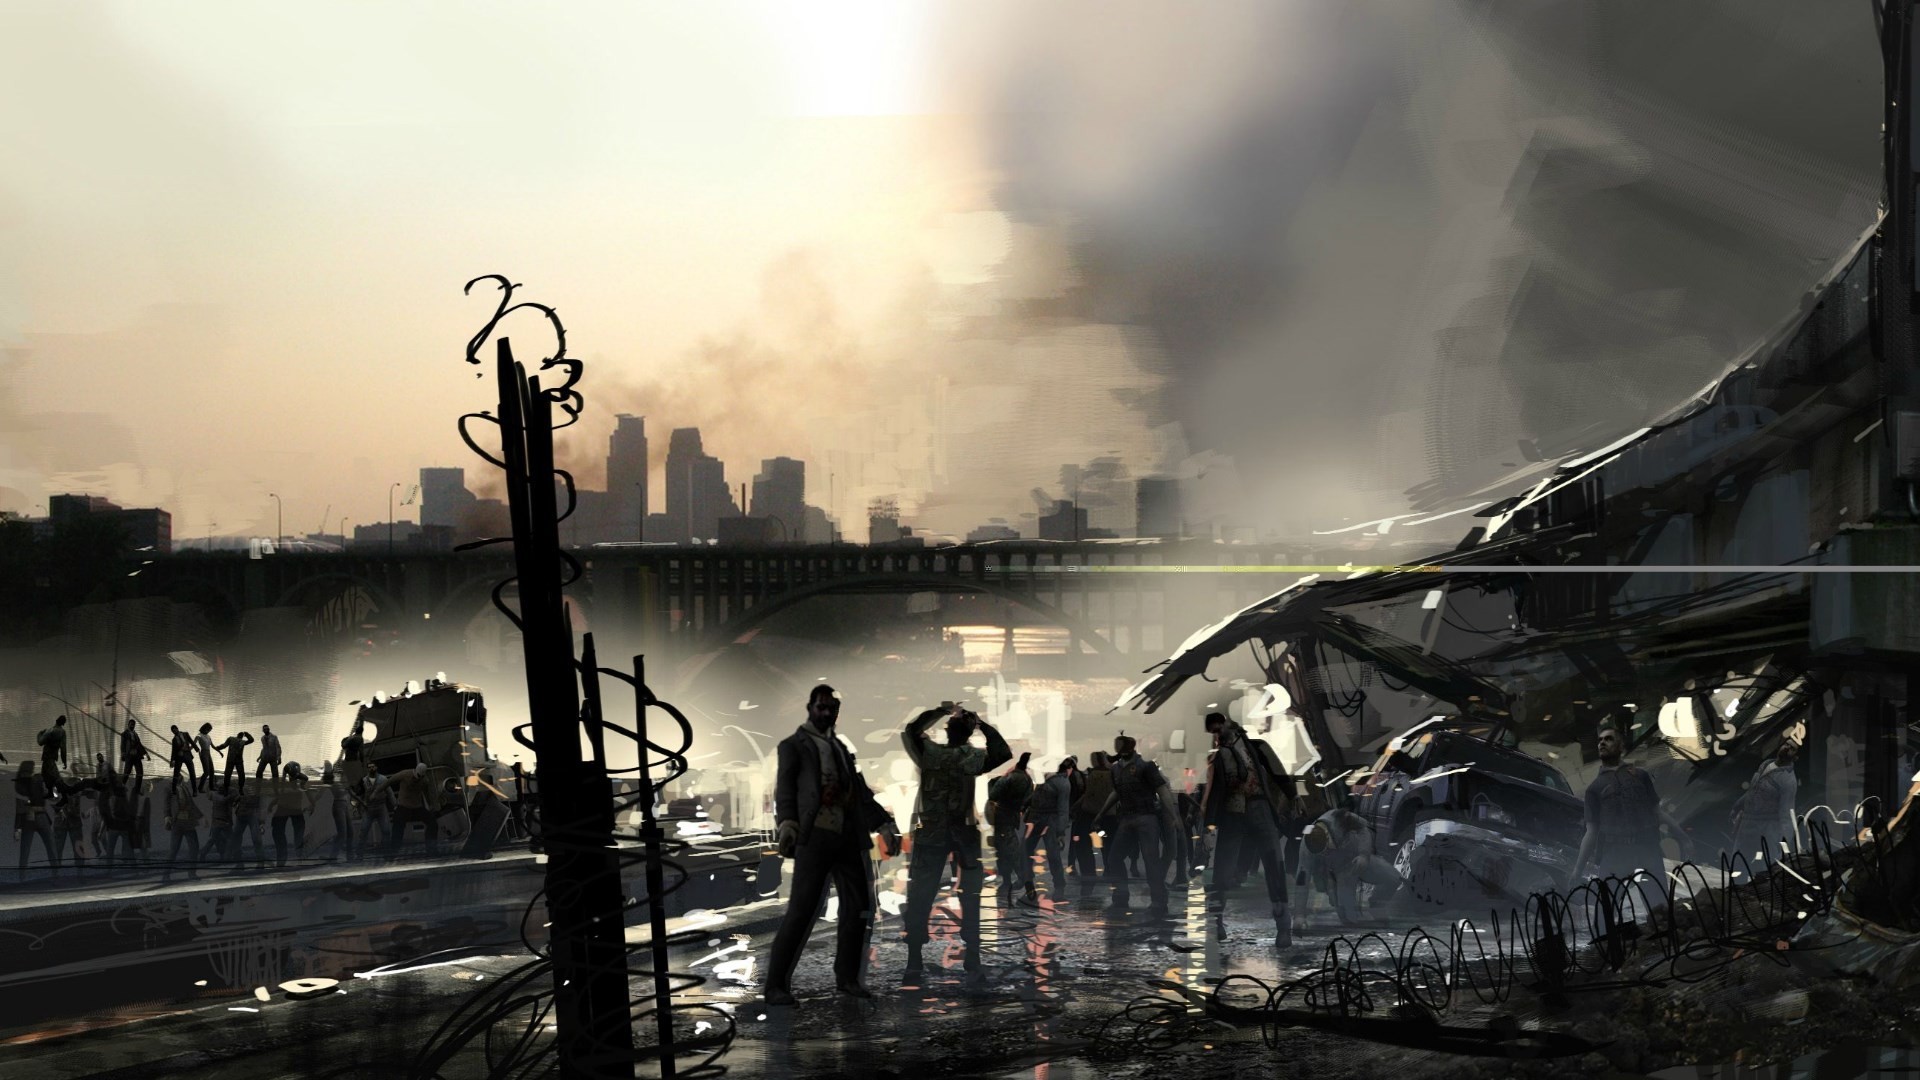 1920x1080 zombie apocalypse wallpaper - Google Search | Zombies | Pinterest .